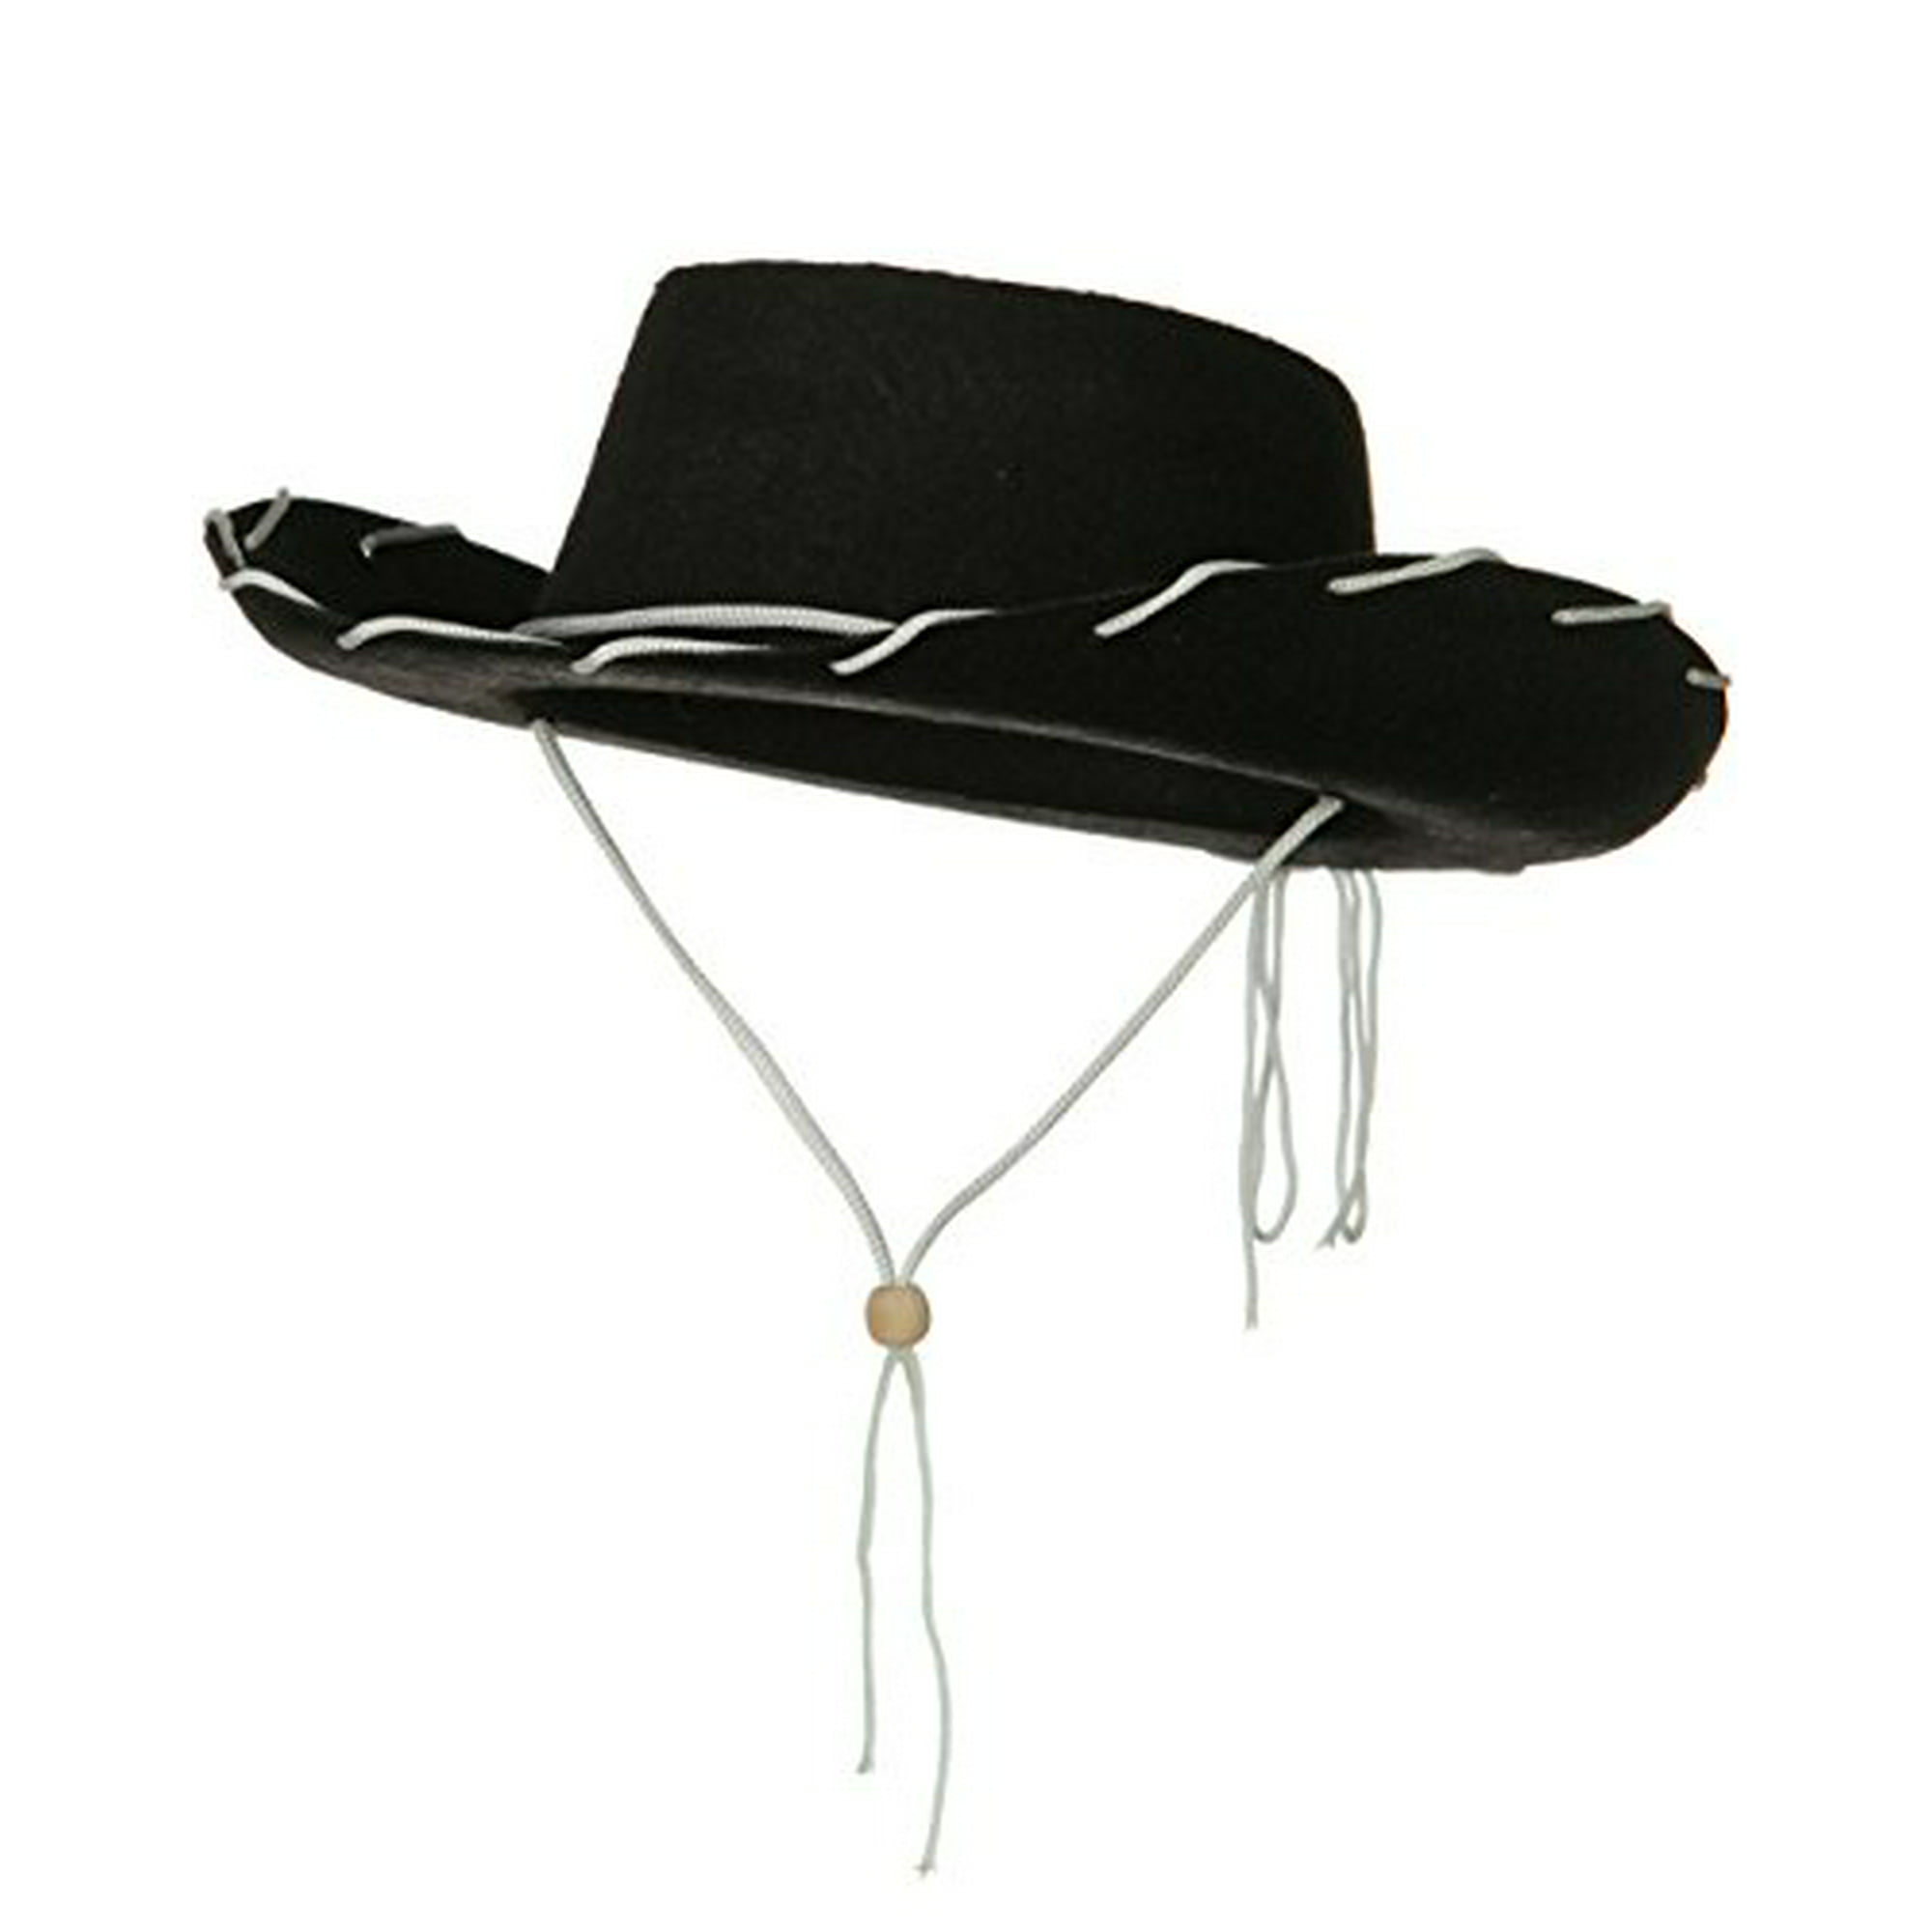 Comprar online Sombrero de Vaquero Cowboy Negro infantil